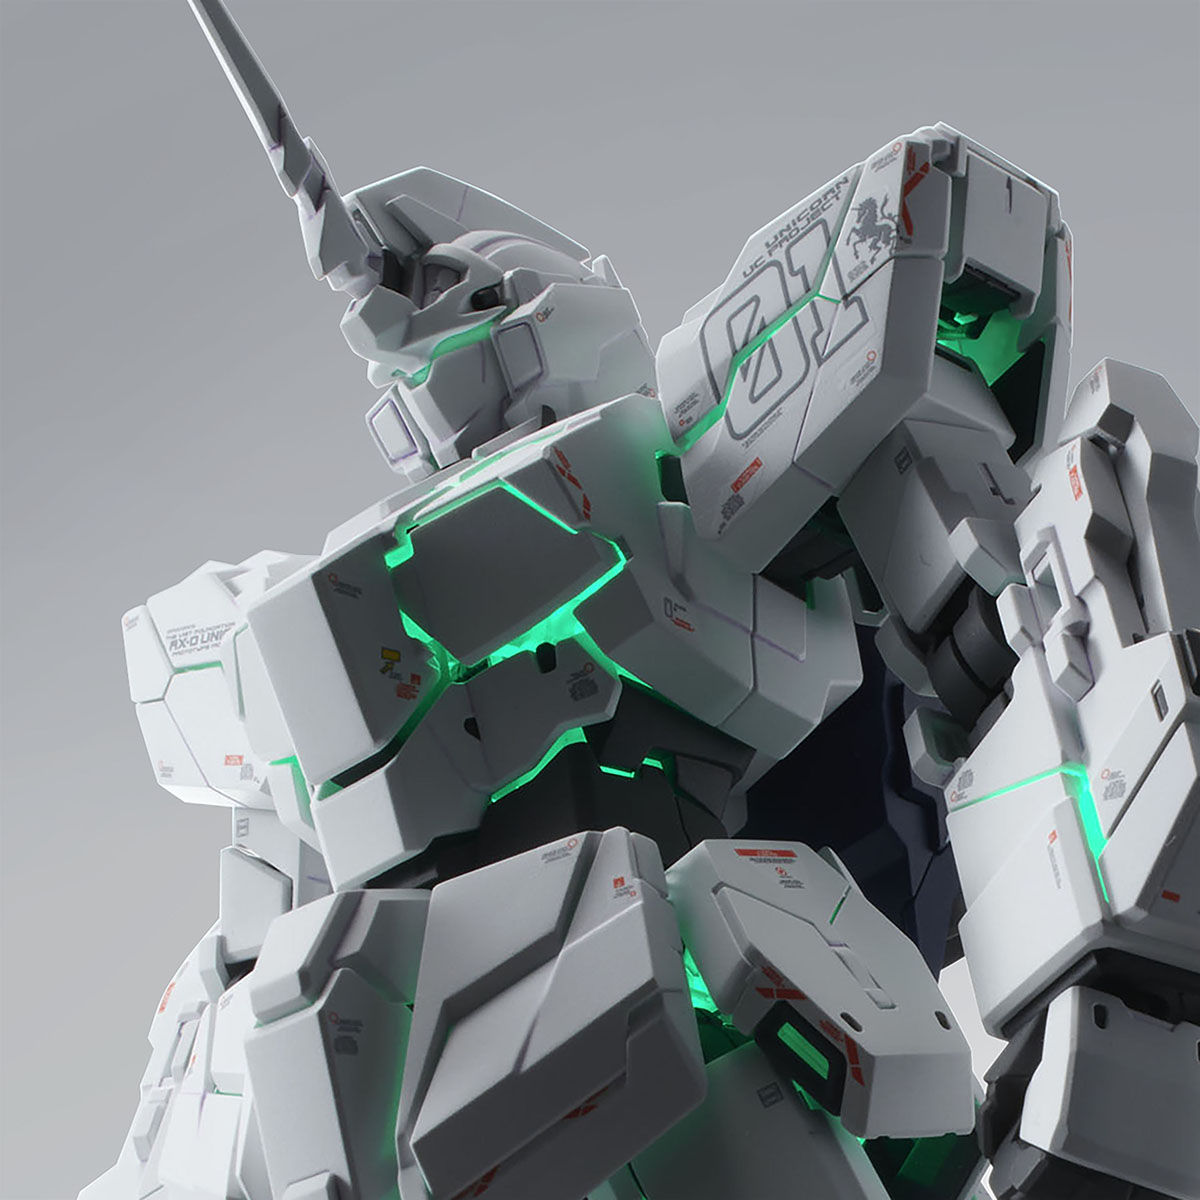 MG Extreme 1/100 RX-0 Unicorn Gundam Ver.Ka(Premium Normal Mode Box)